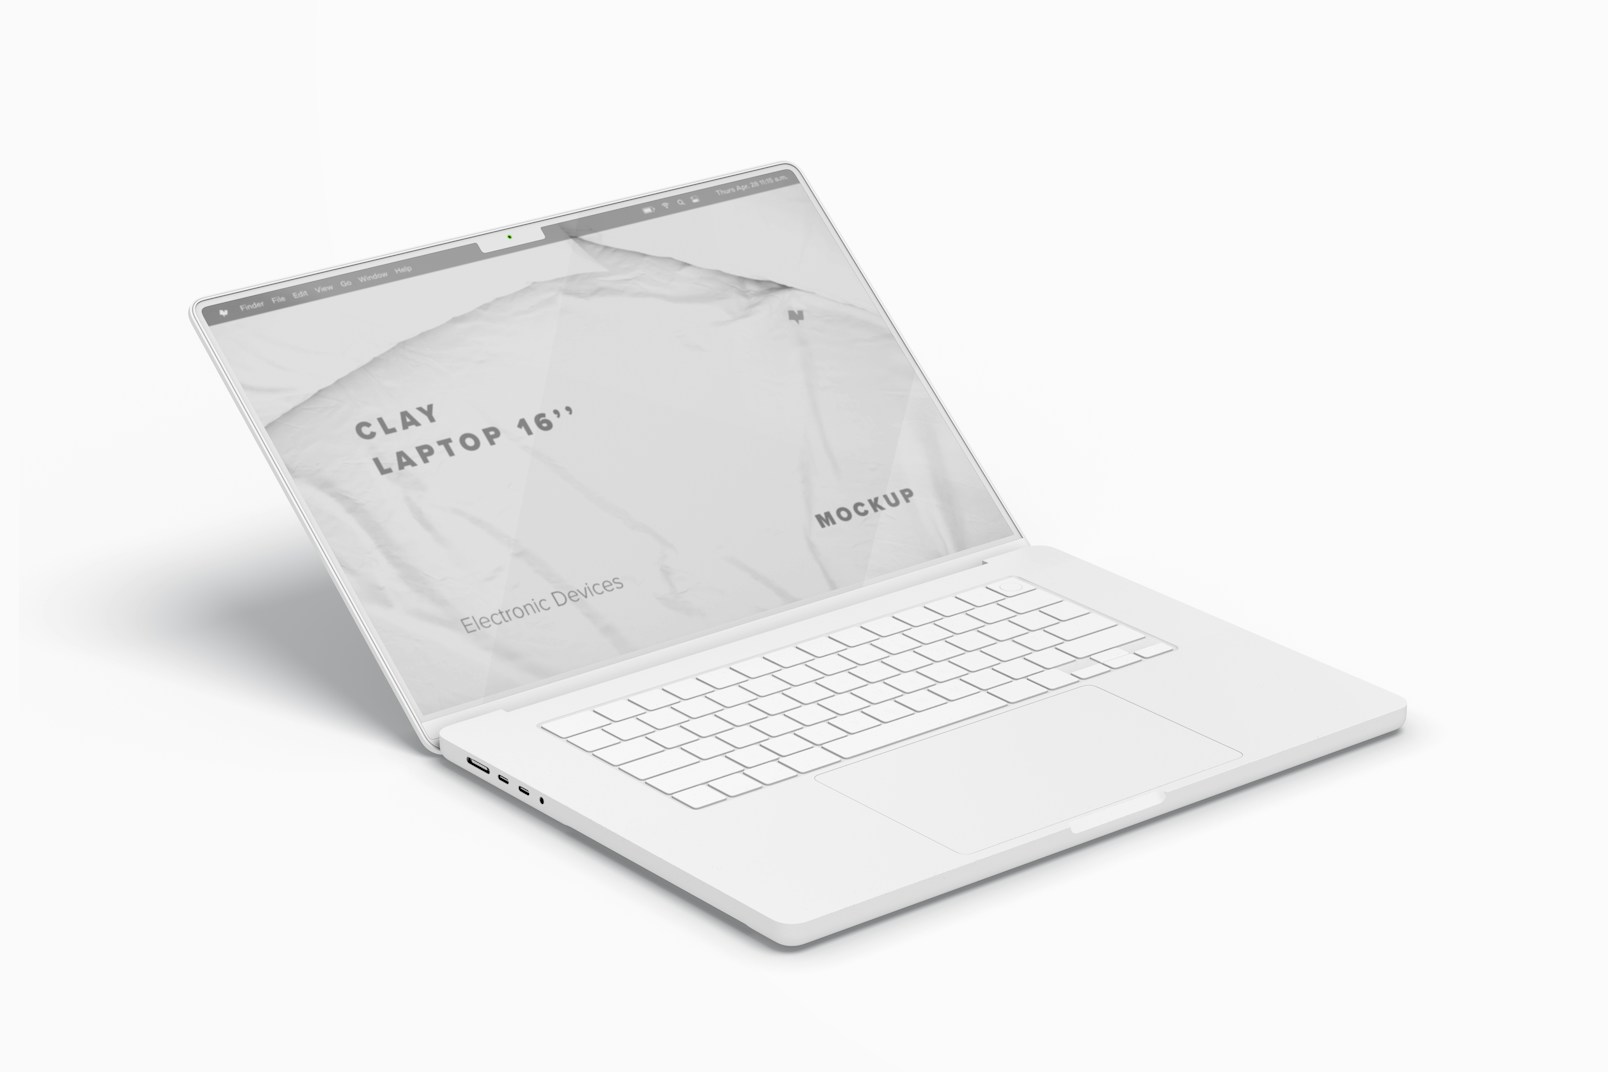 Clay MacBook Pro Mockup, High Angle View